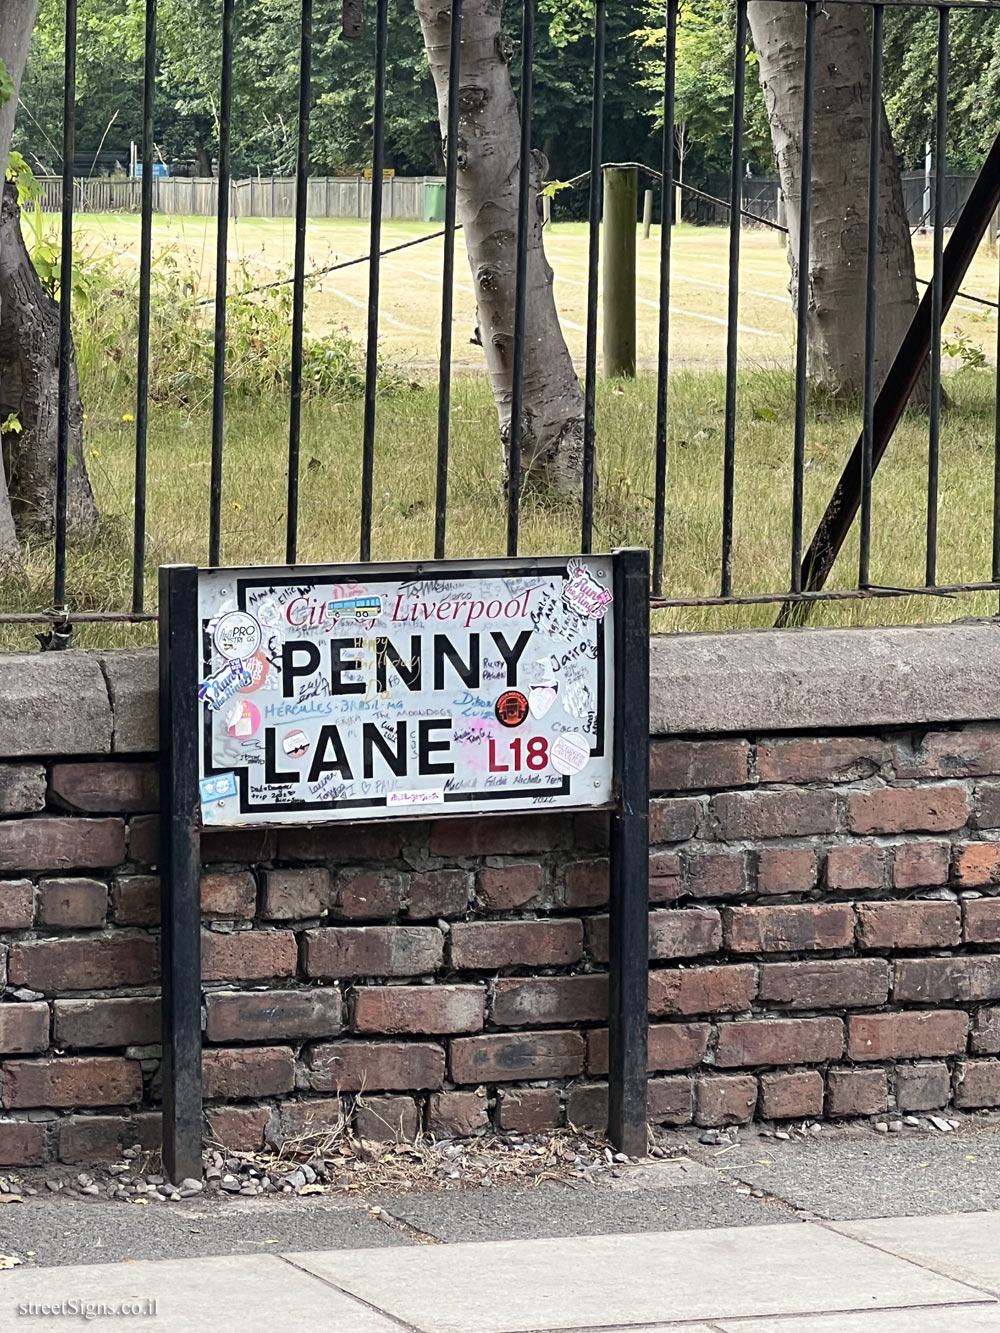 Liverpool - Penny Lane - Penny Lane, Liverpool L18 1HW, UK